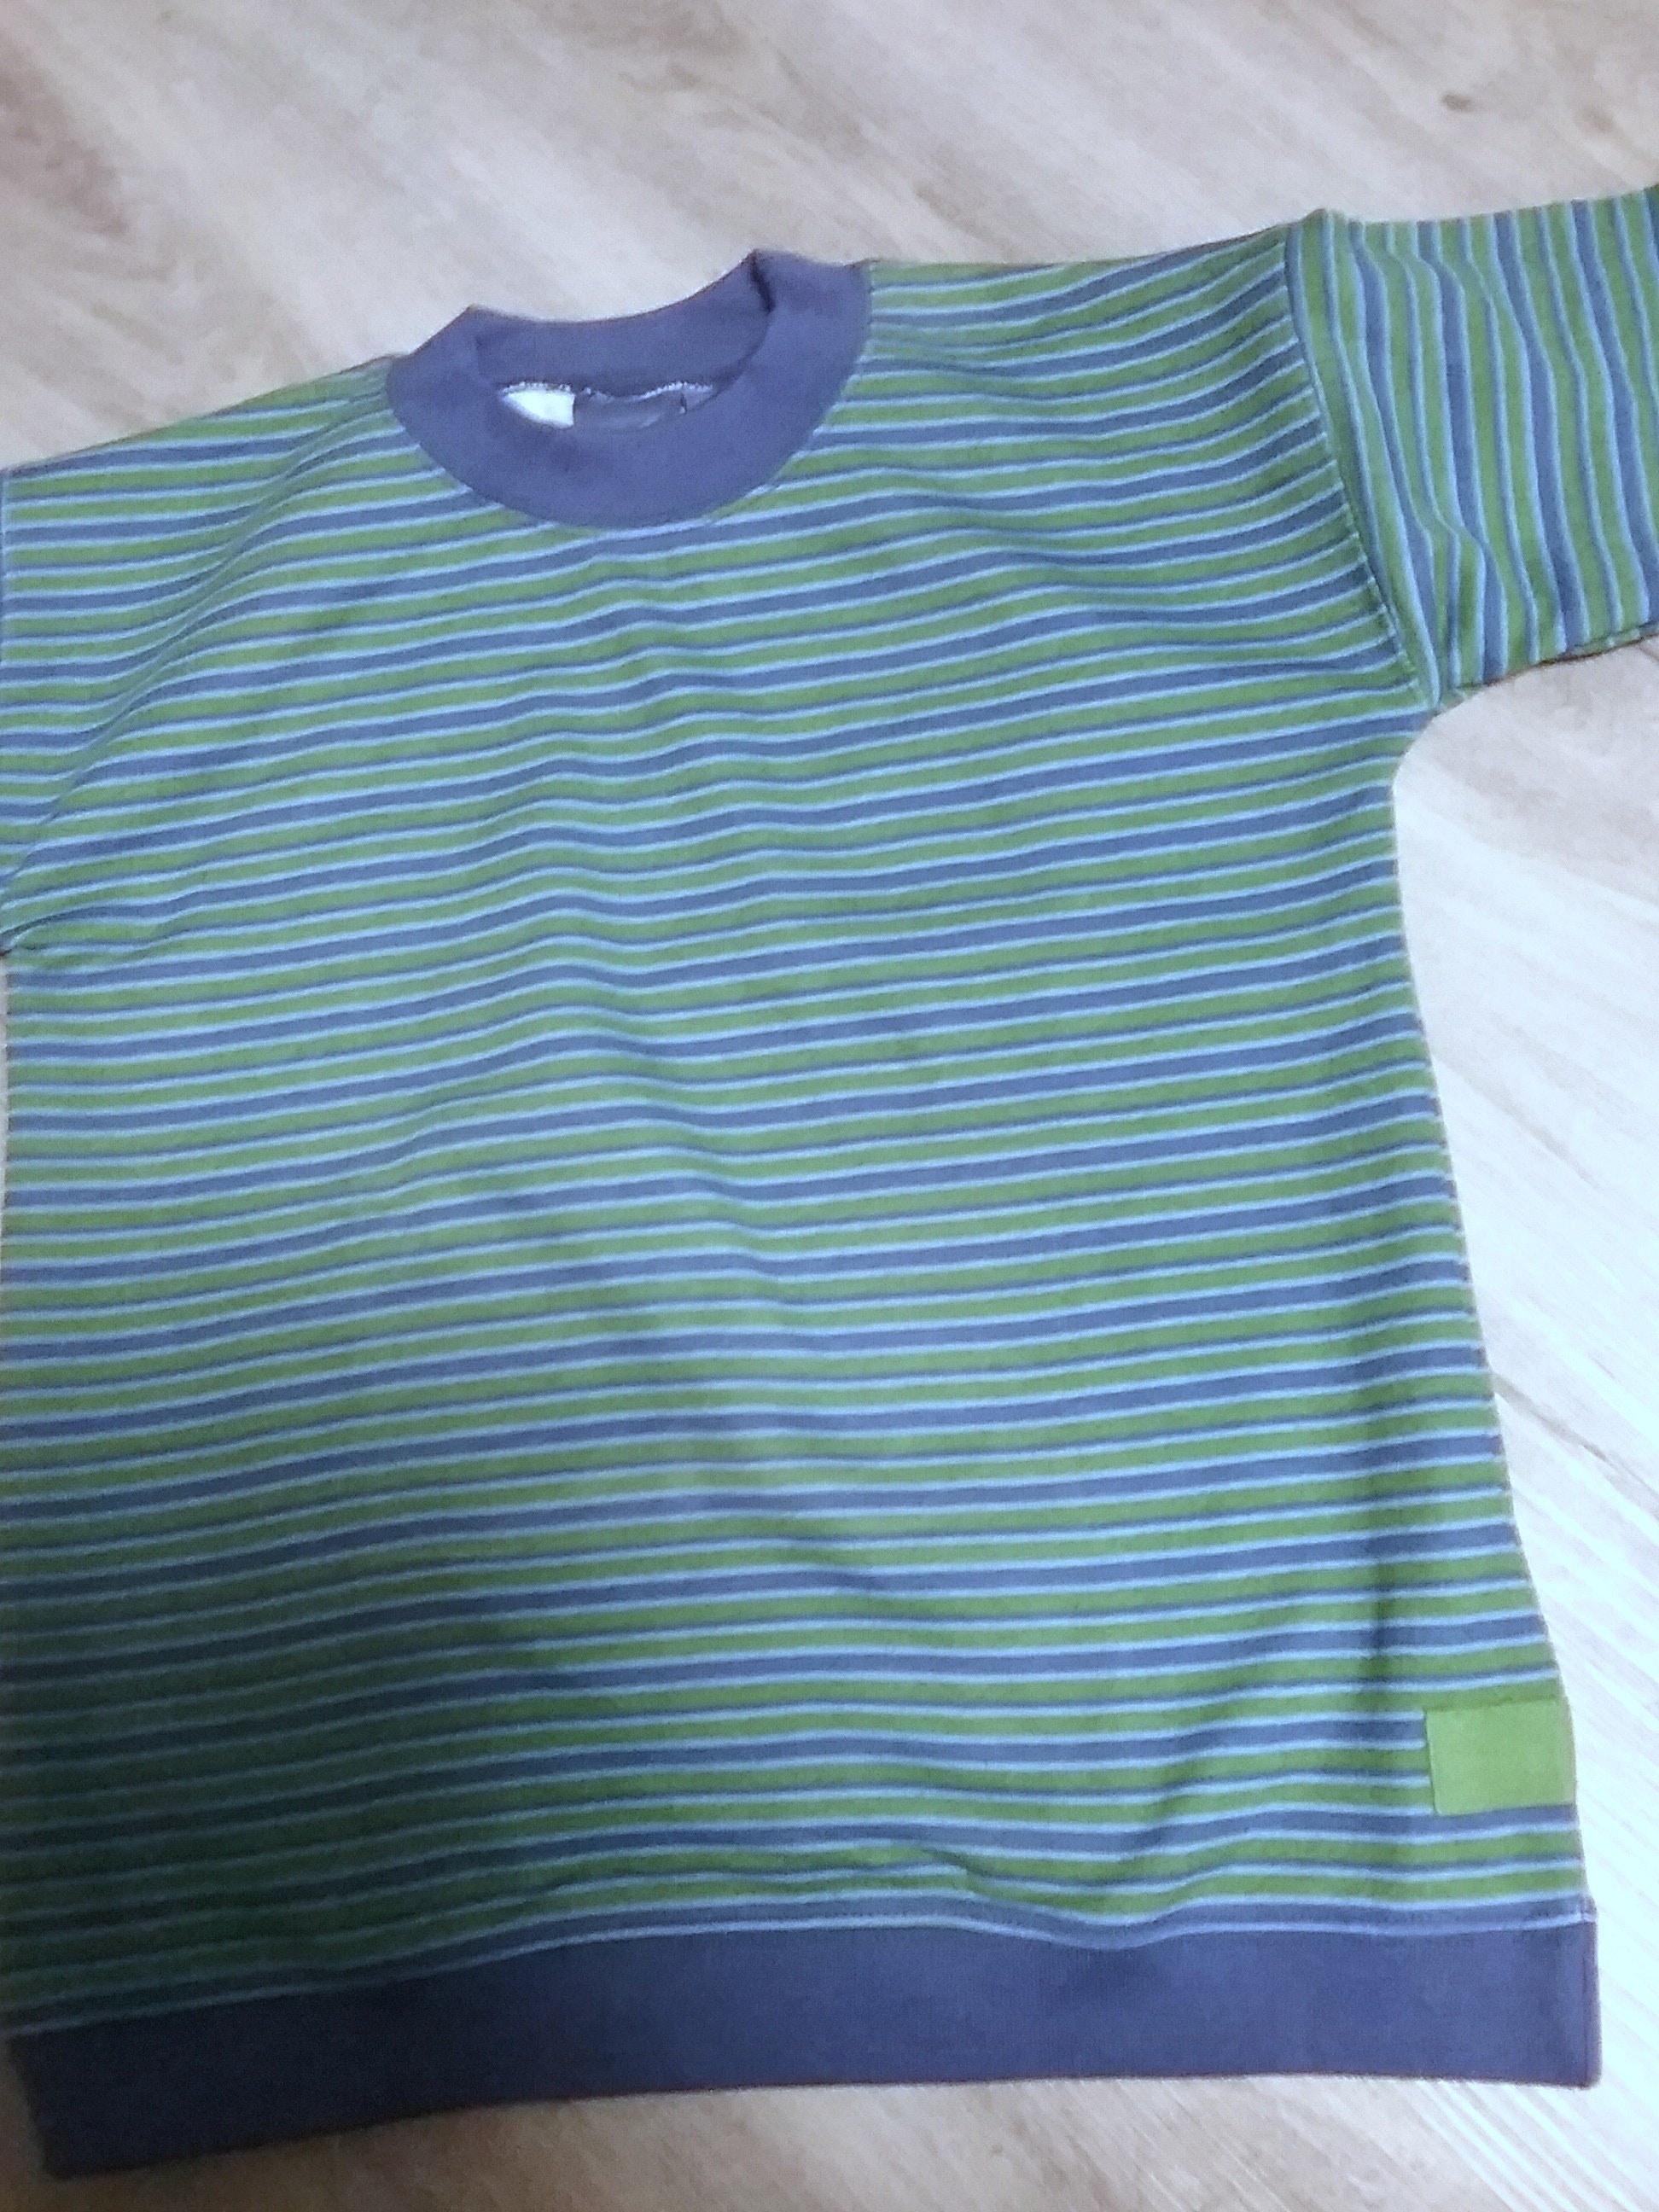 Jumper, Sweatshirt, Kids, Striped, Logo, Sleeve Patch, Dark Blue With  Green, S.oliver, Vintage - Etsy